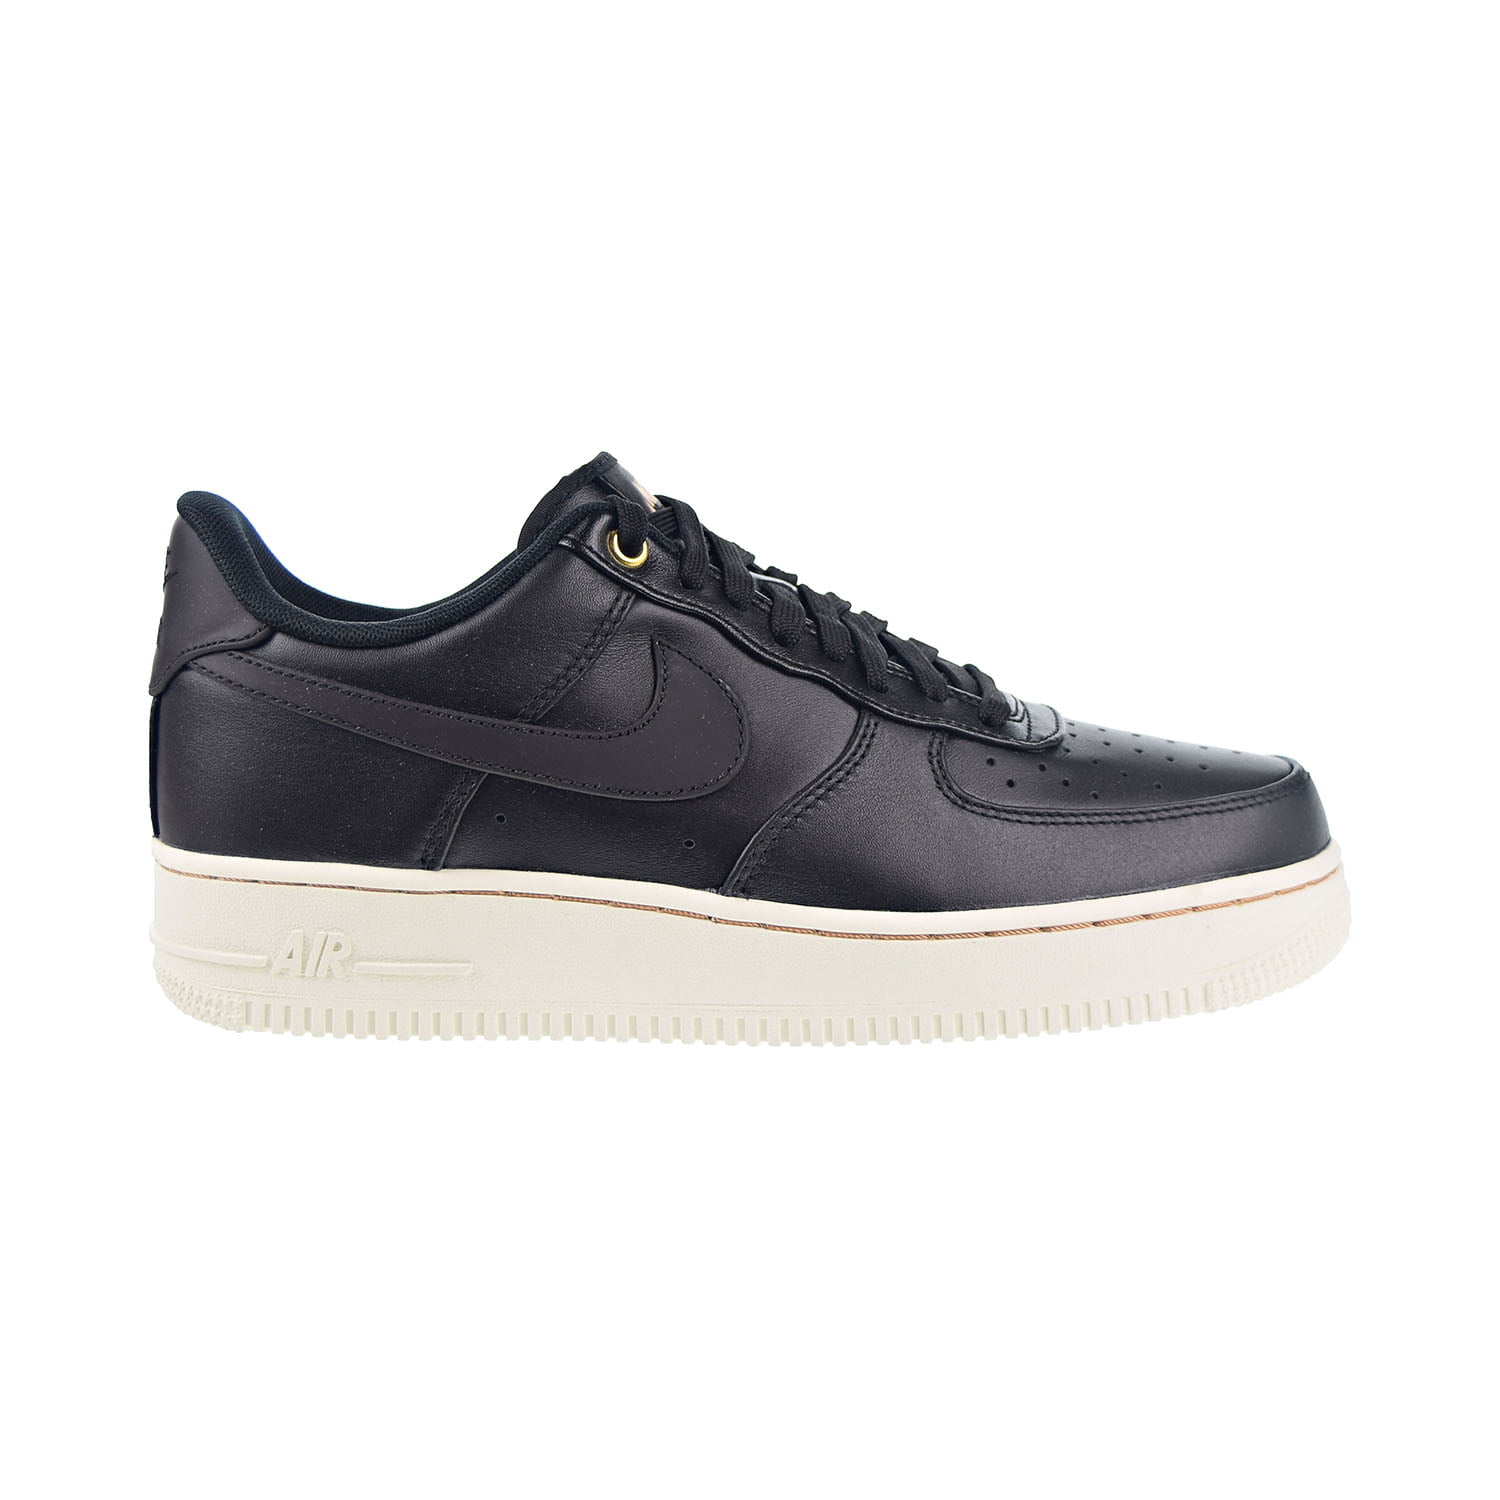 Nike Force 1 Premium "Black Men's Shoes Black-Vachetta Tan - Walmart.com